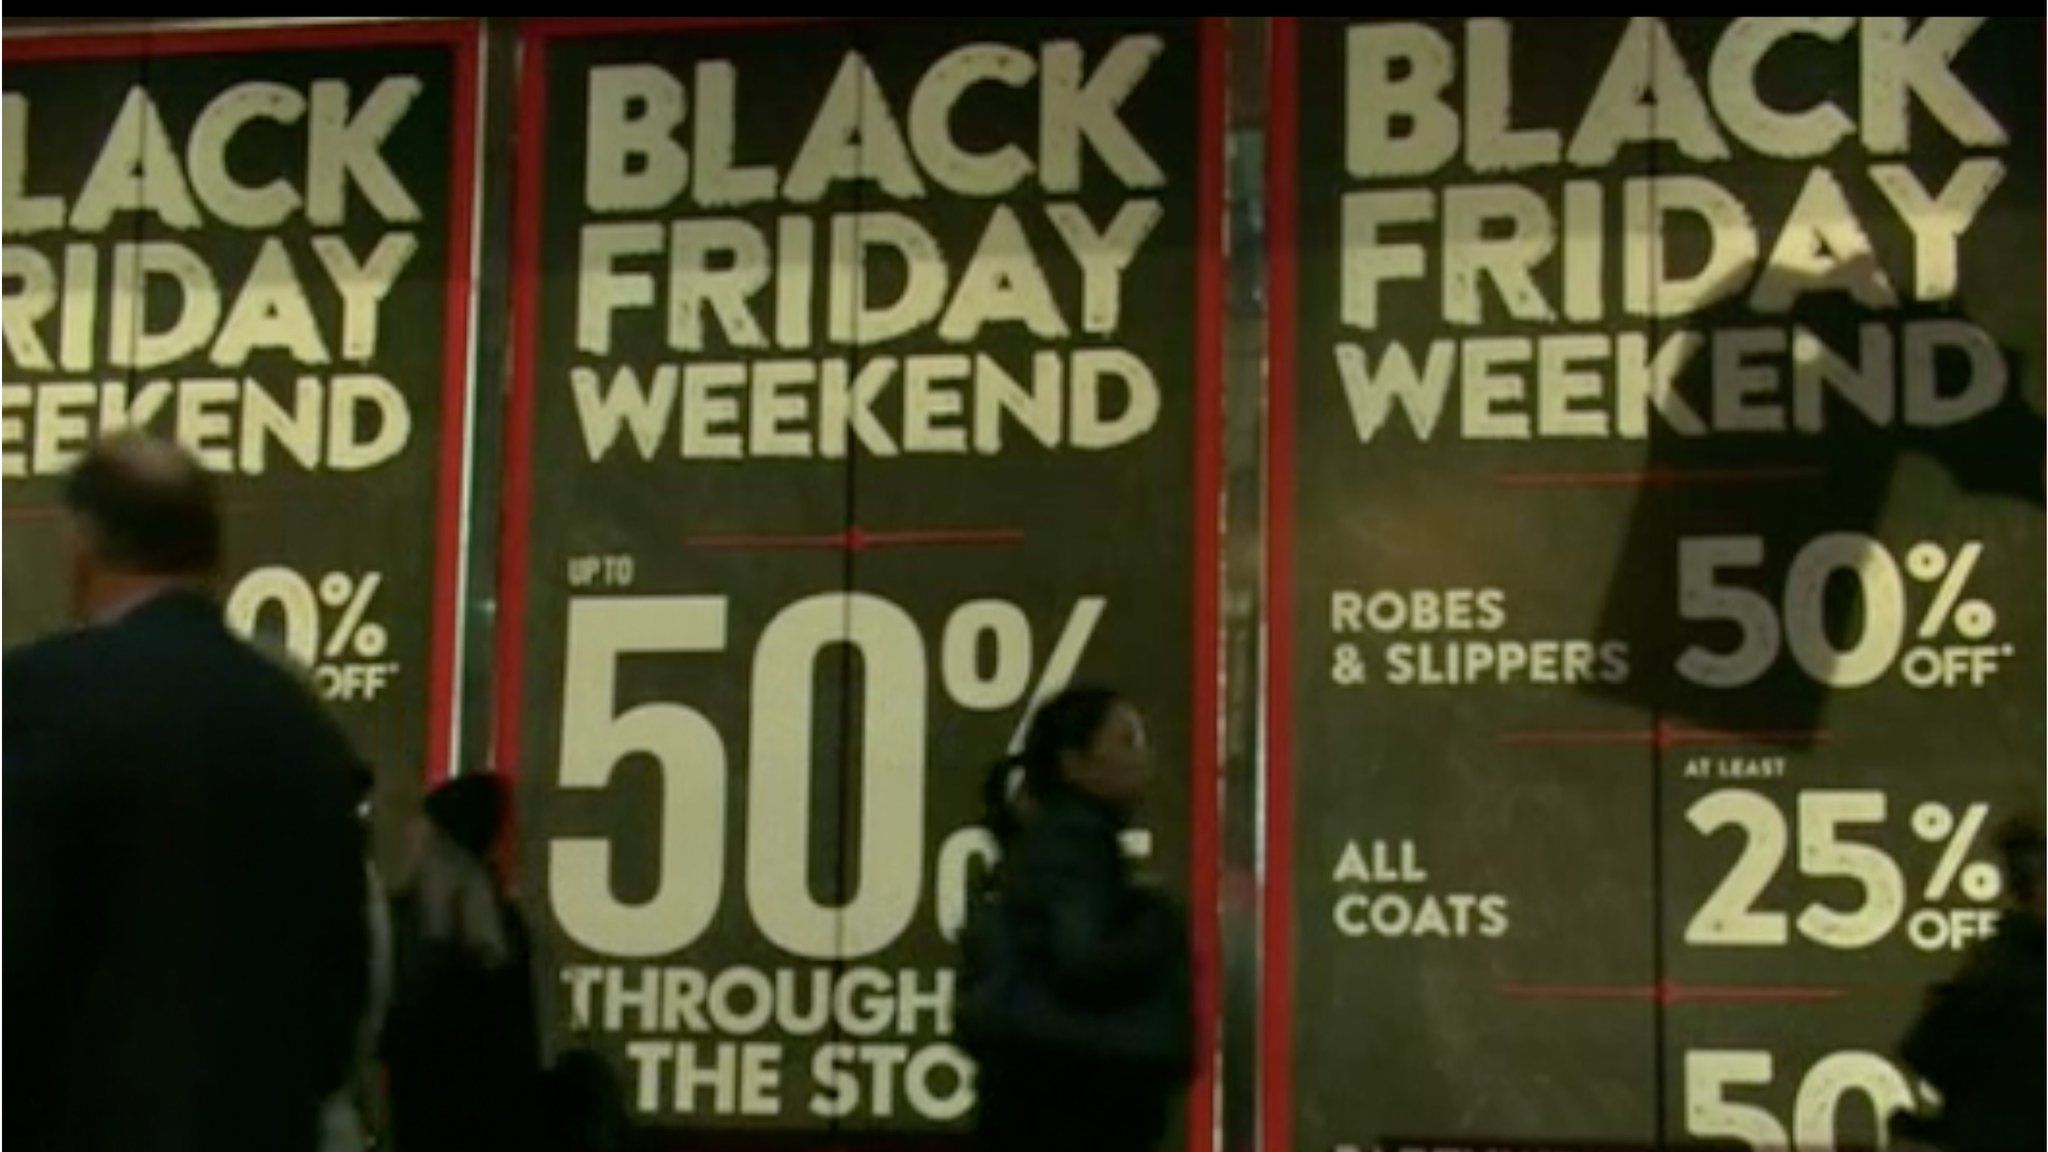 BBC Black Friday